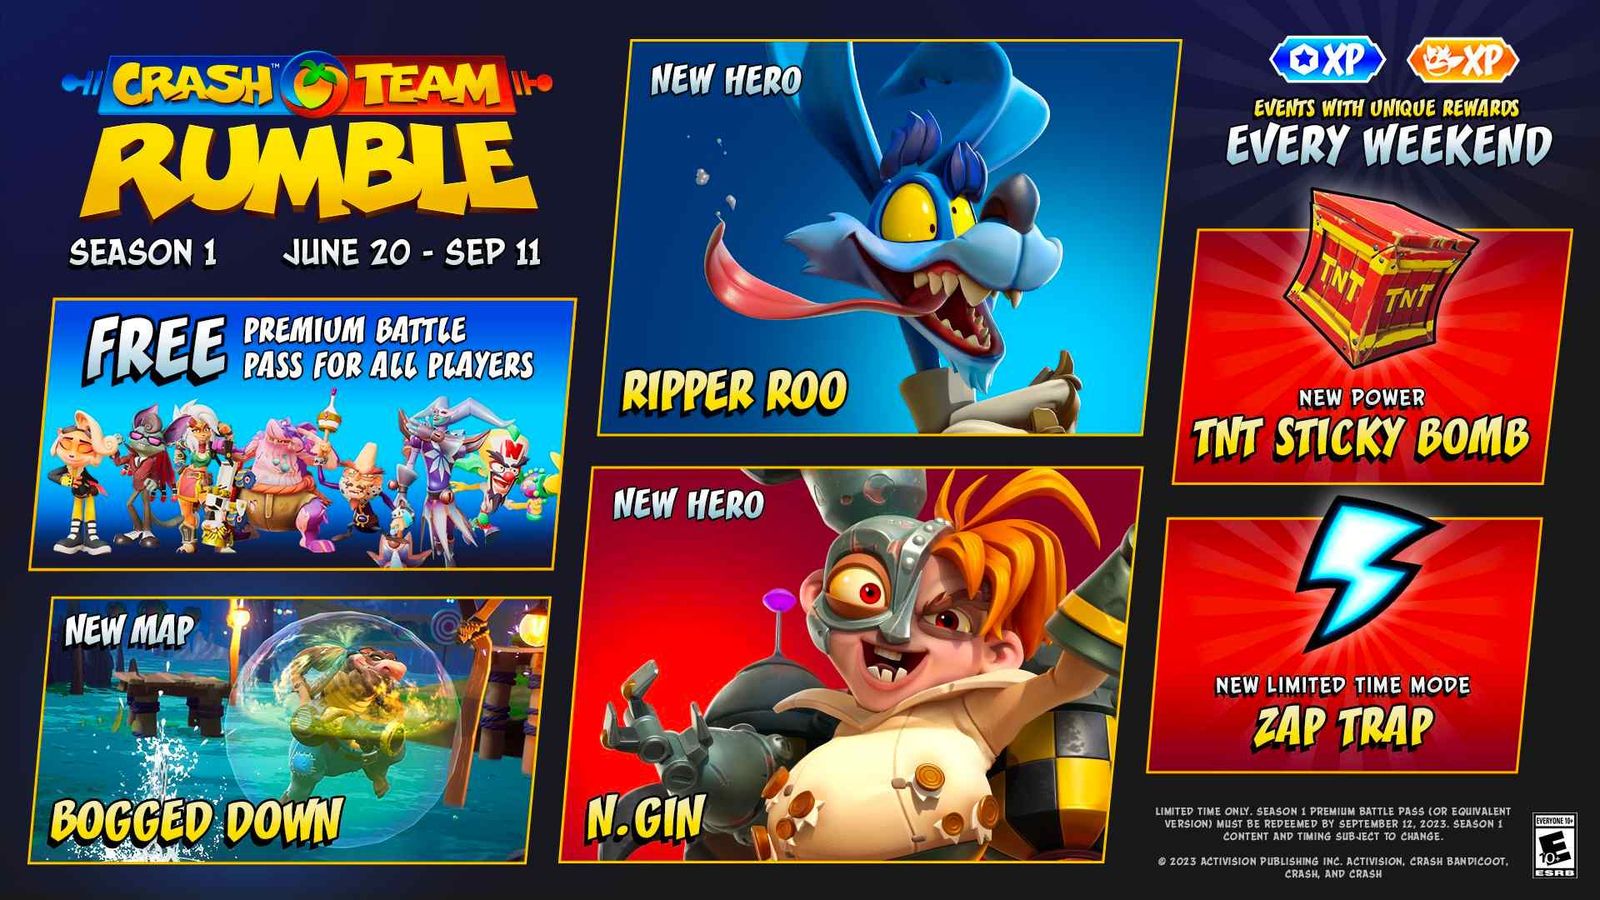 An image of the Crash Team Rumble Season 1 roadmap.